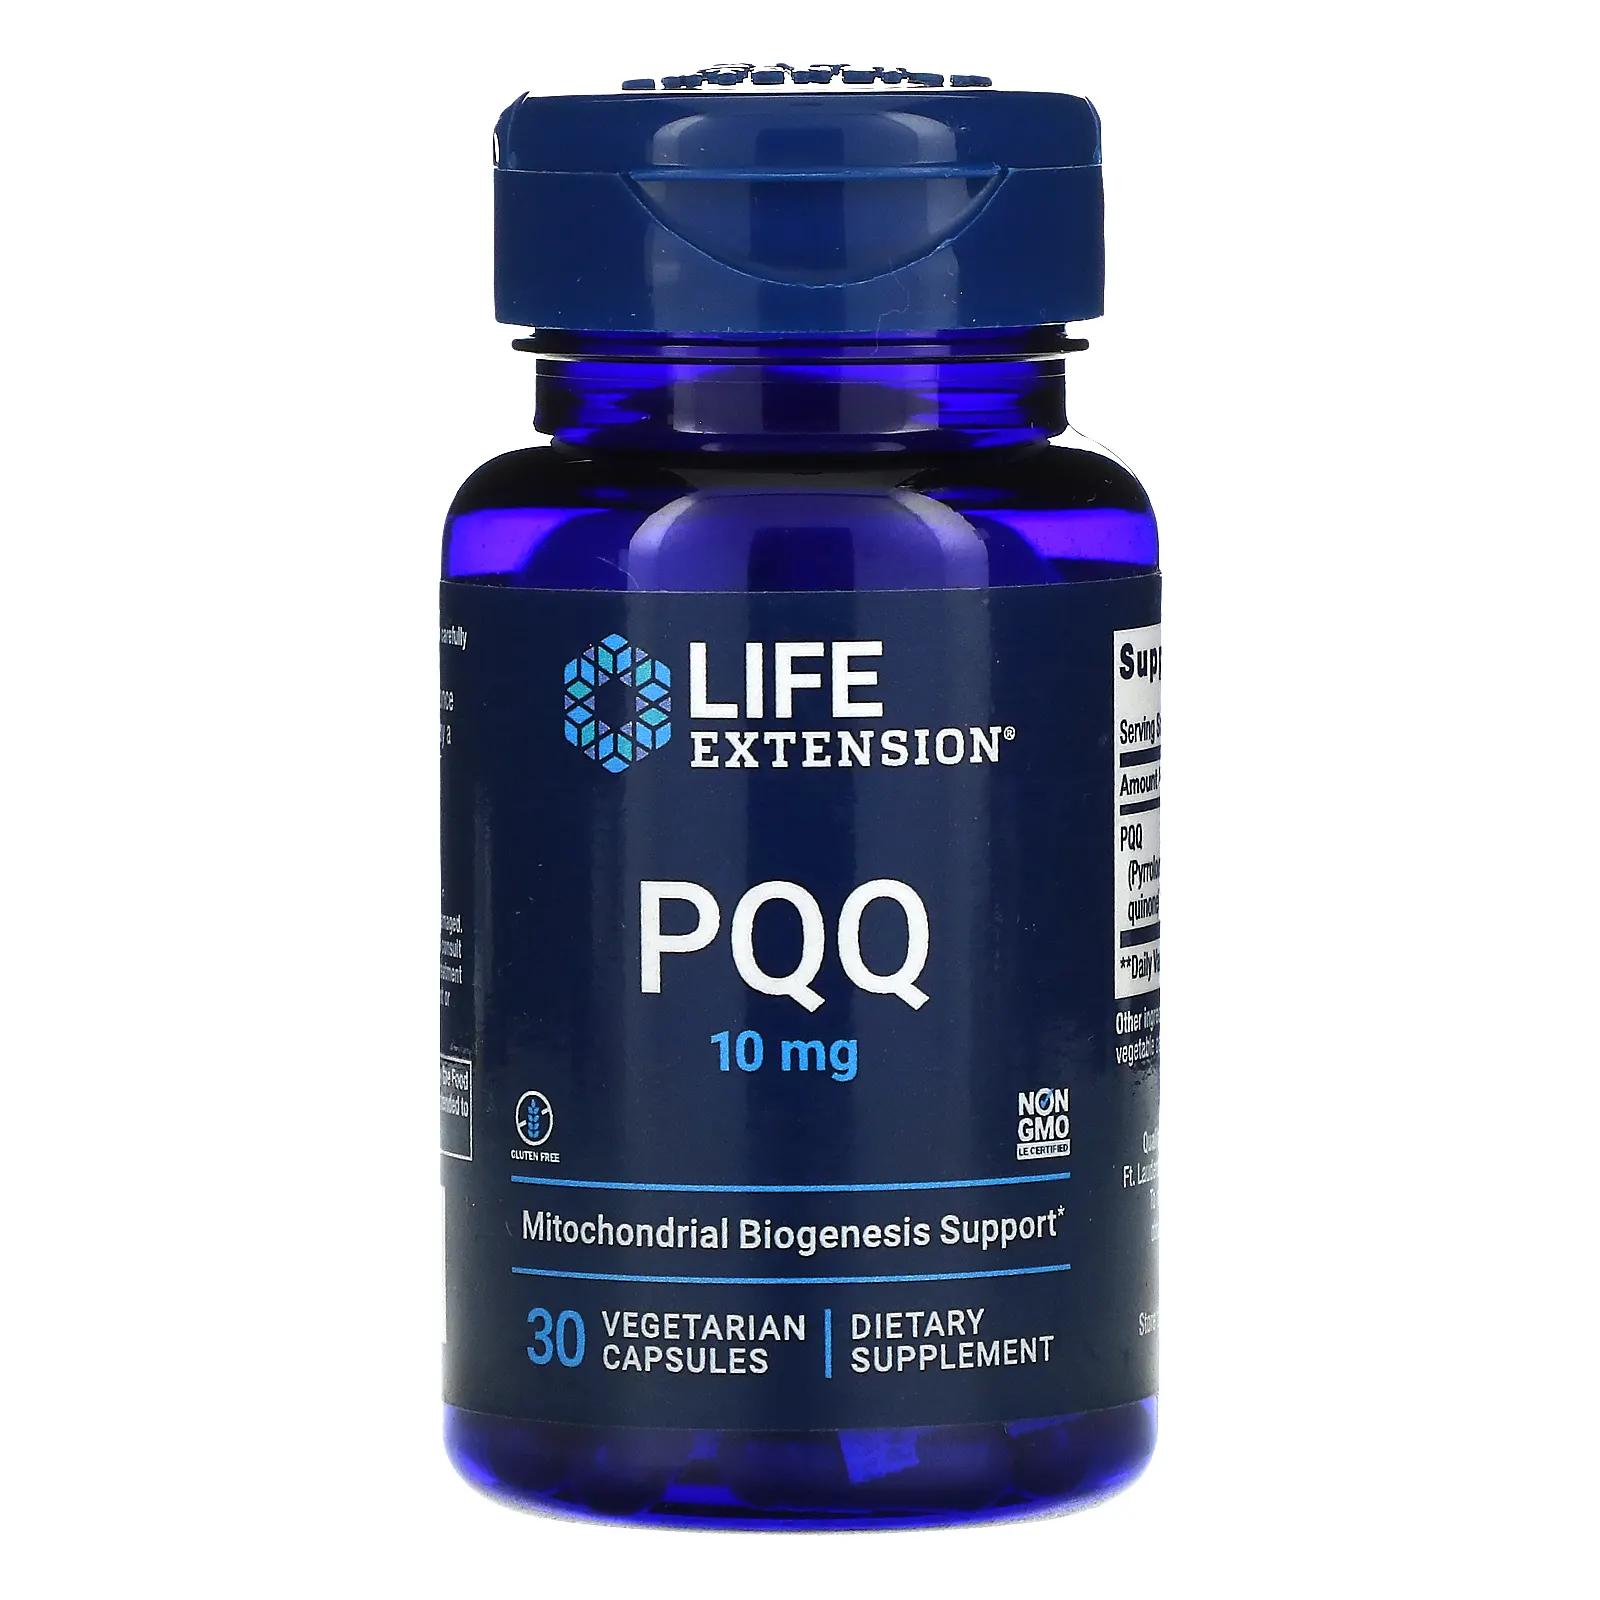 Life Extension PQQ Caps 10 mg 30 Vegetarian Capsules balance 30 liquid vegetarian capsules